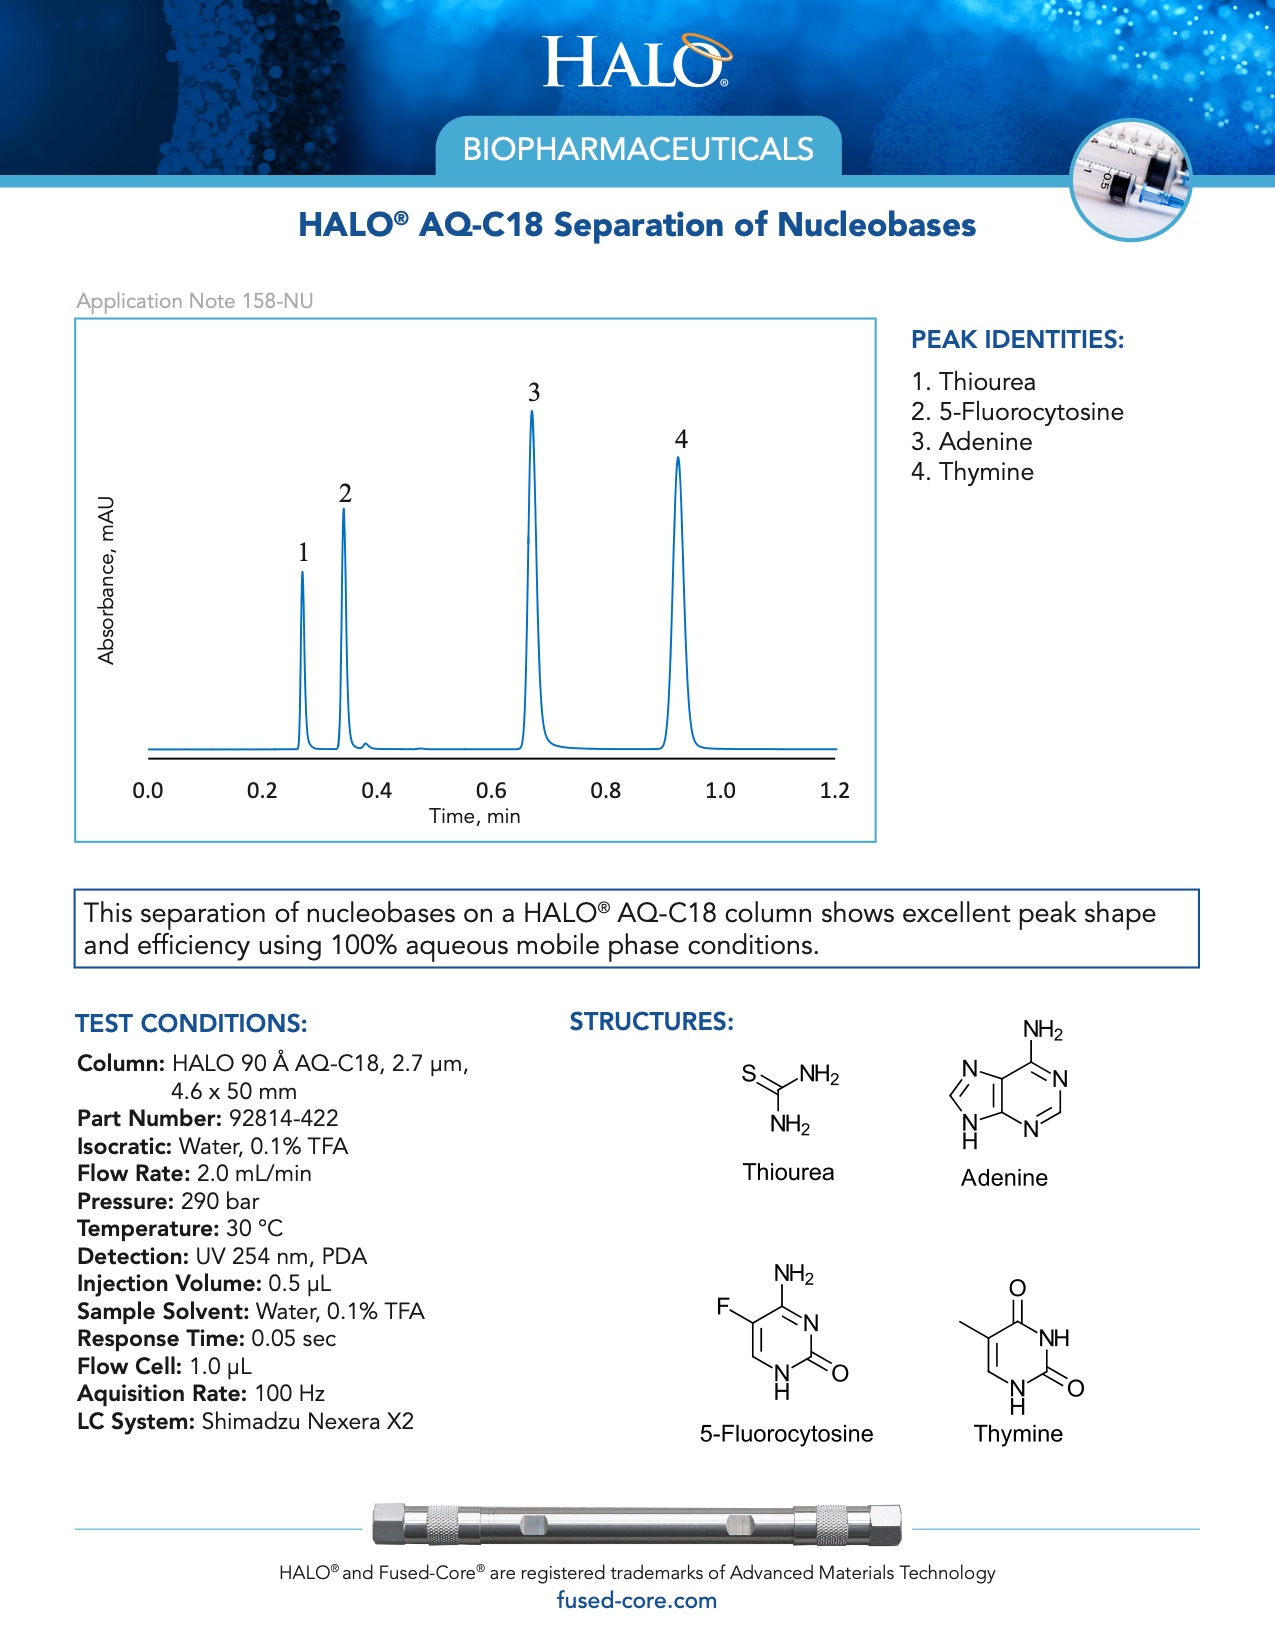 aq-c18 separation of nucleobases